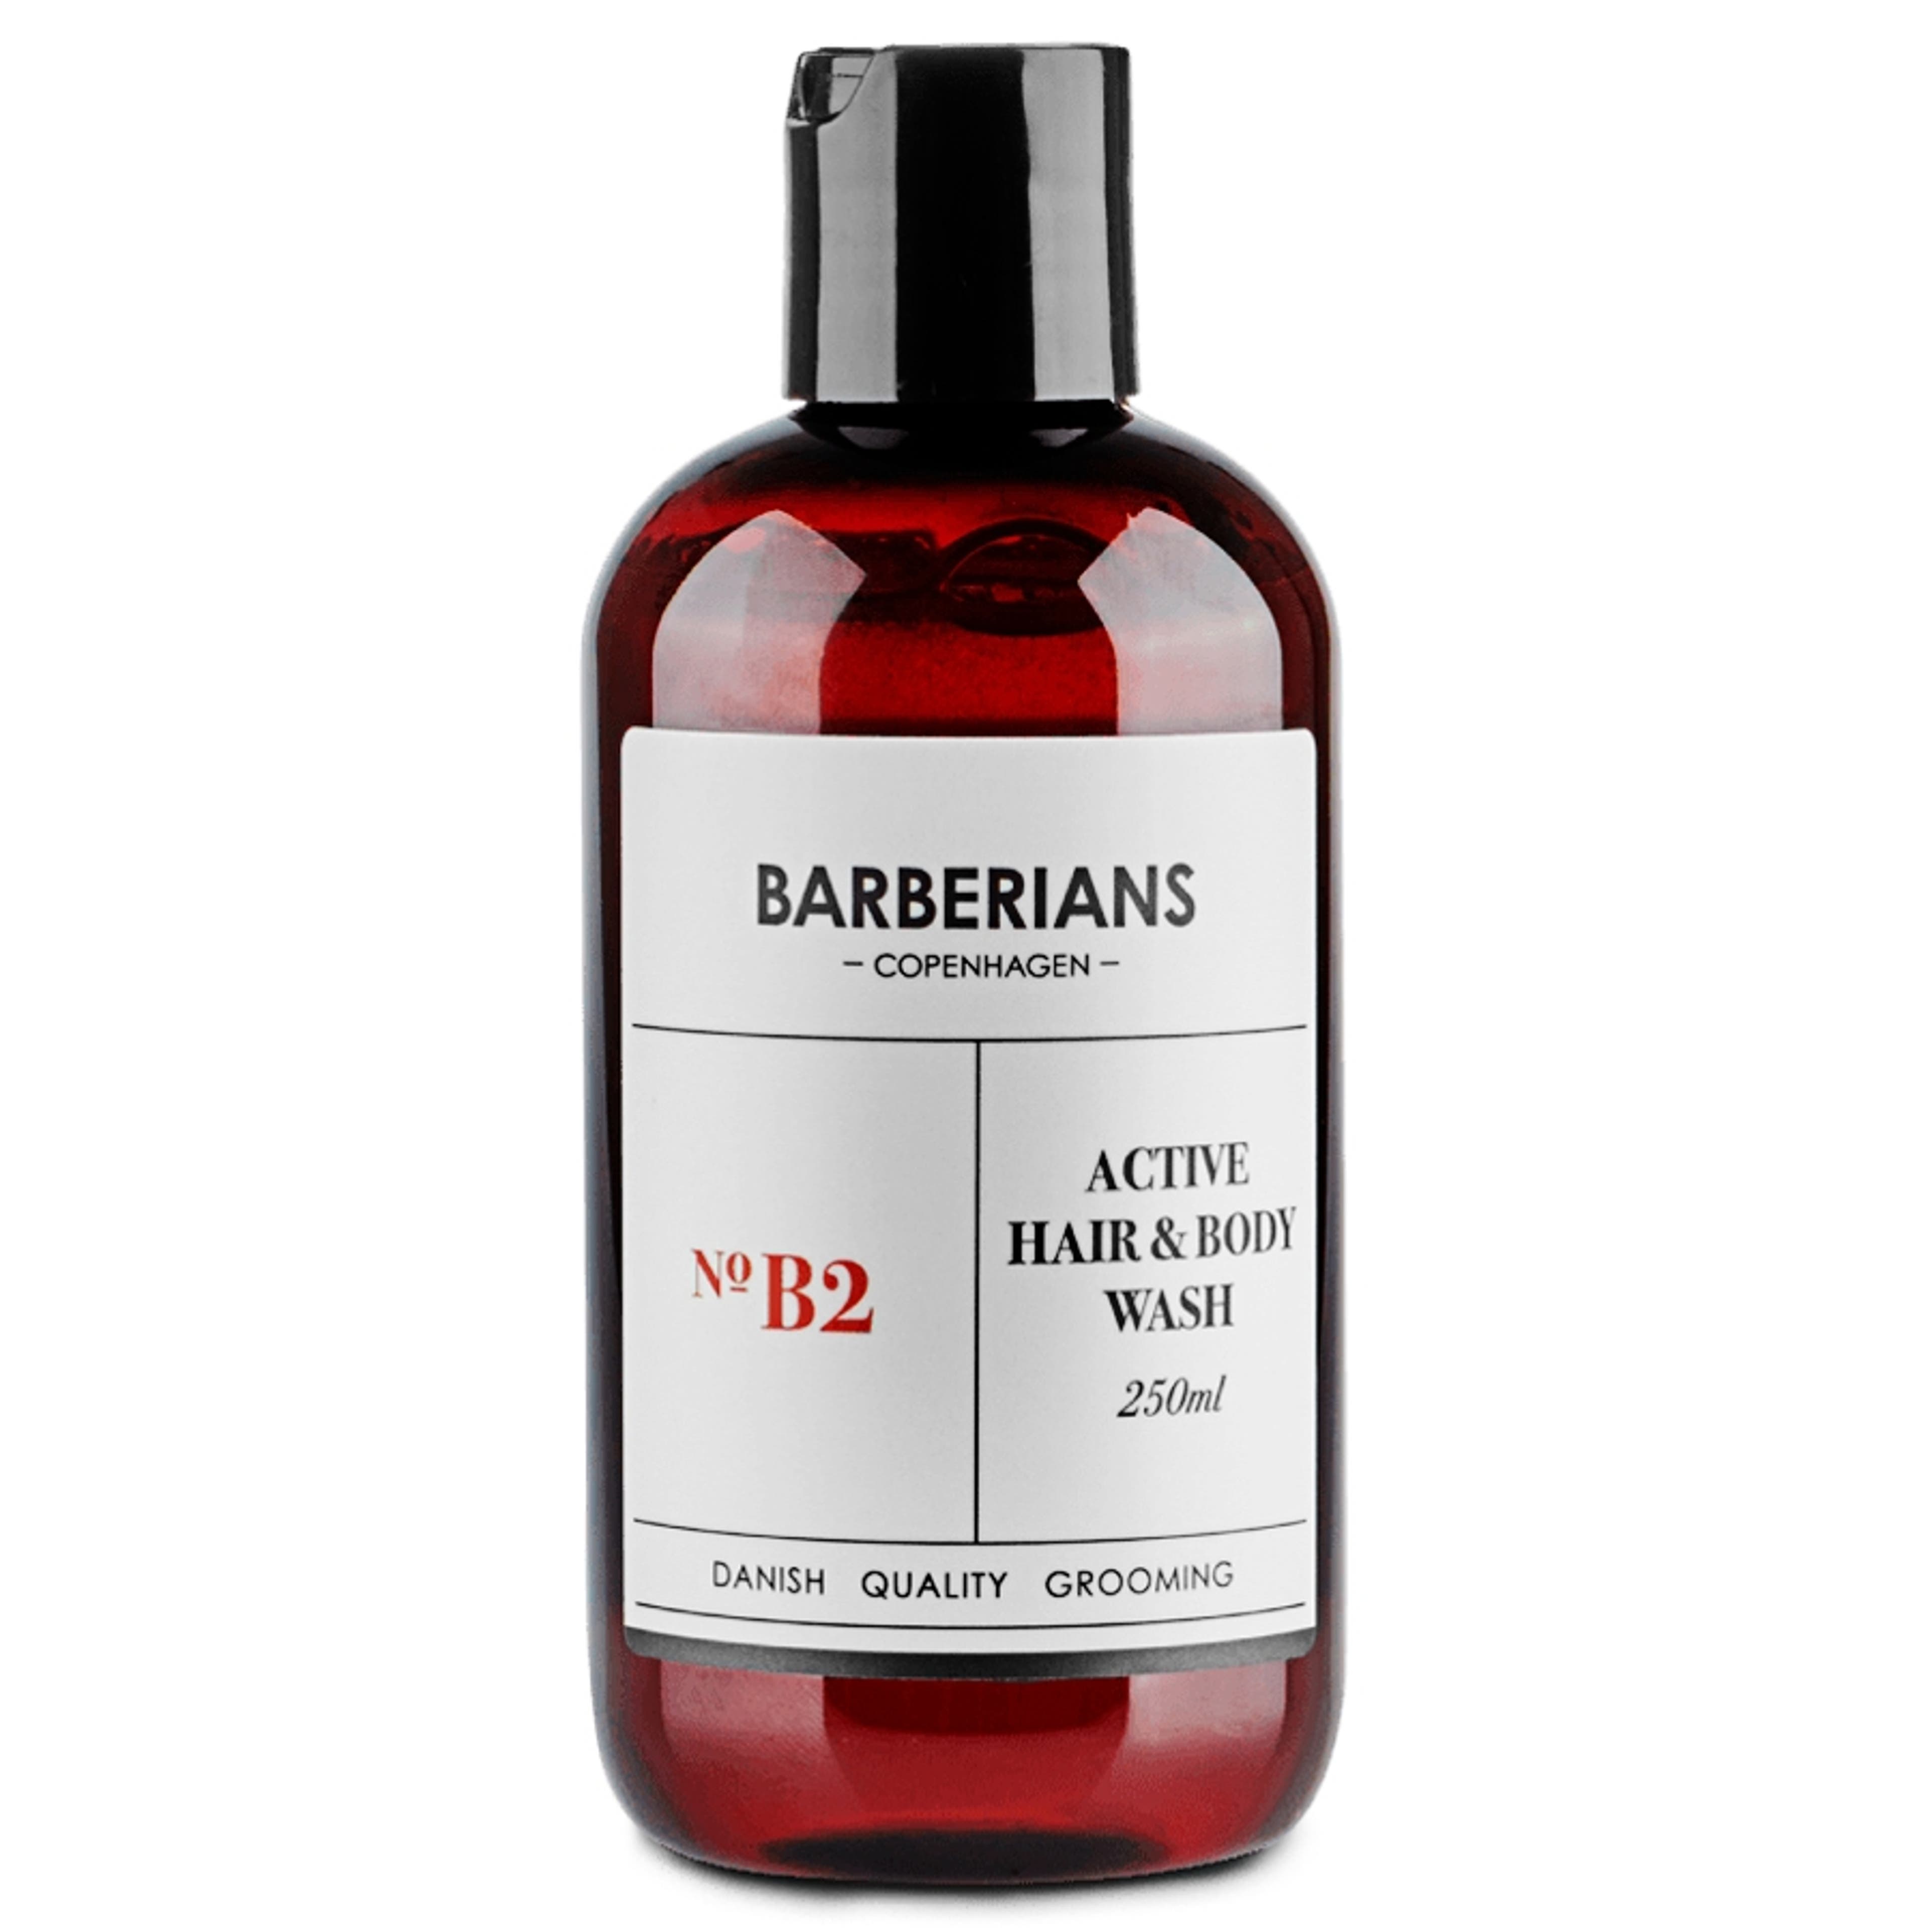 Barberians - Active Hair & Body Wash